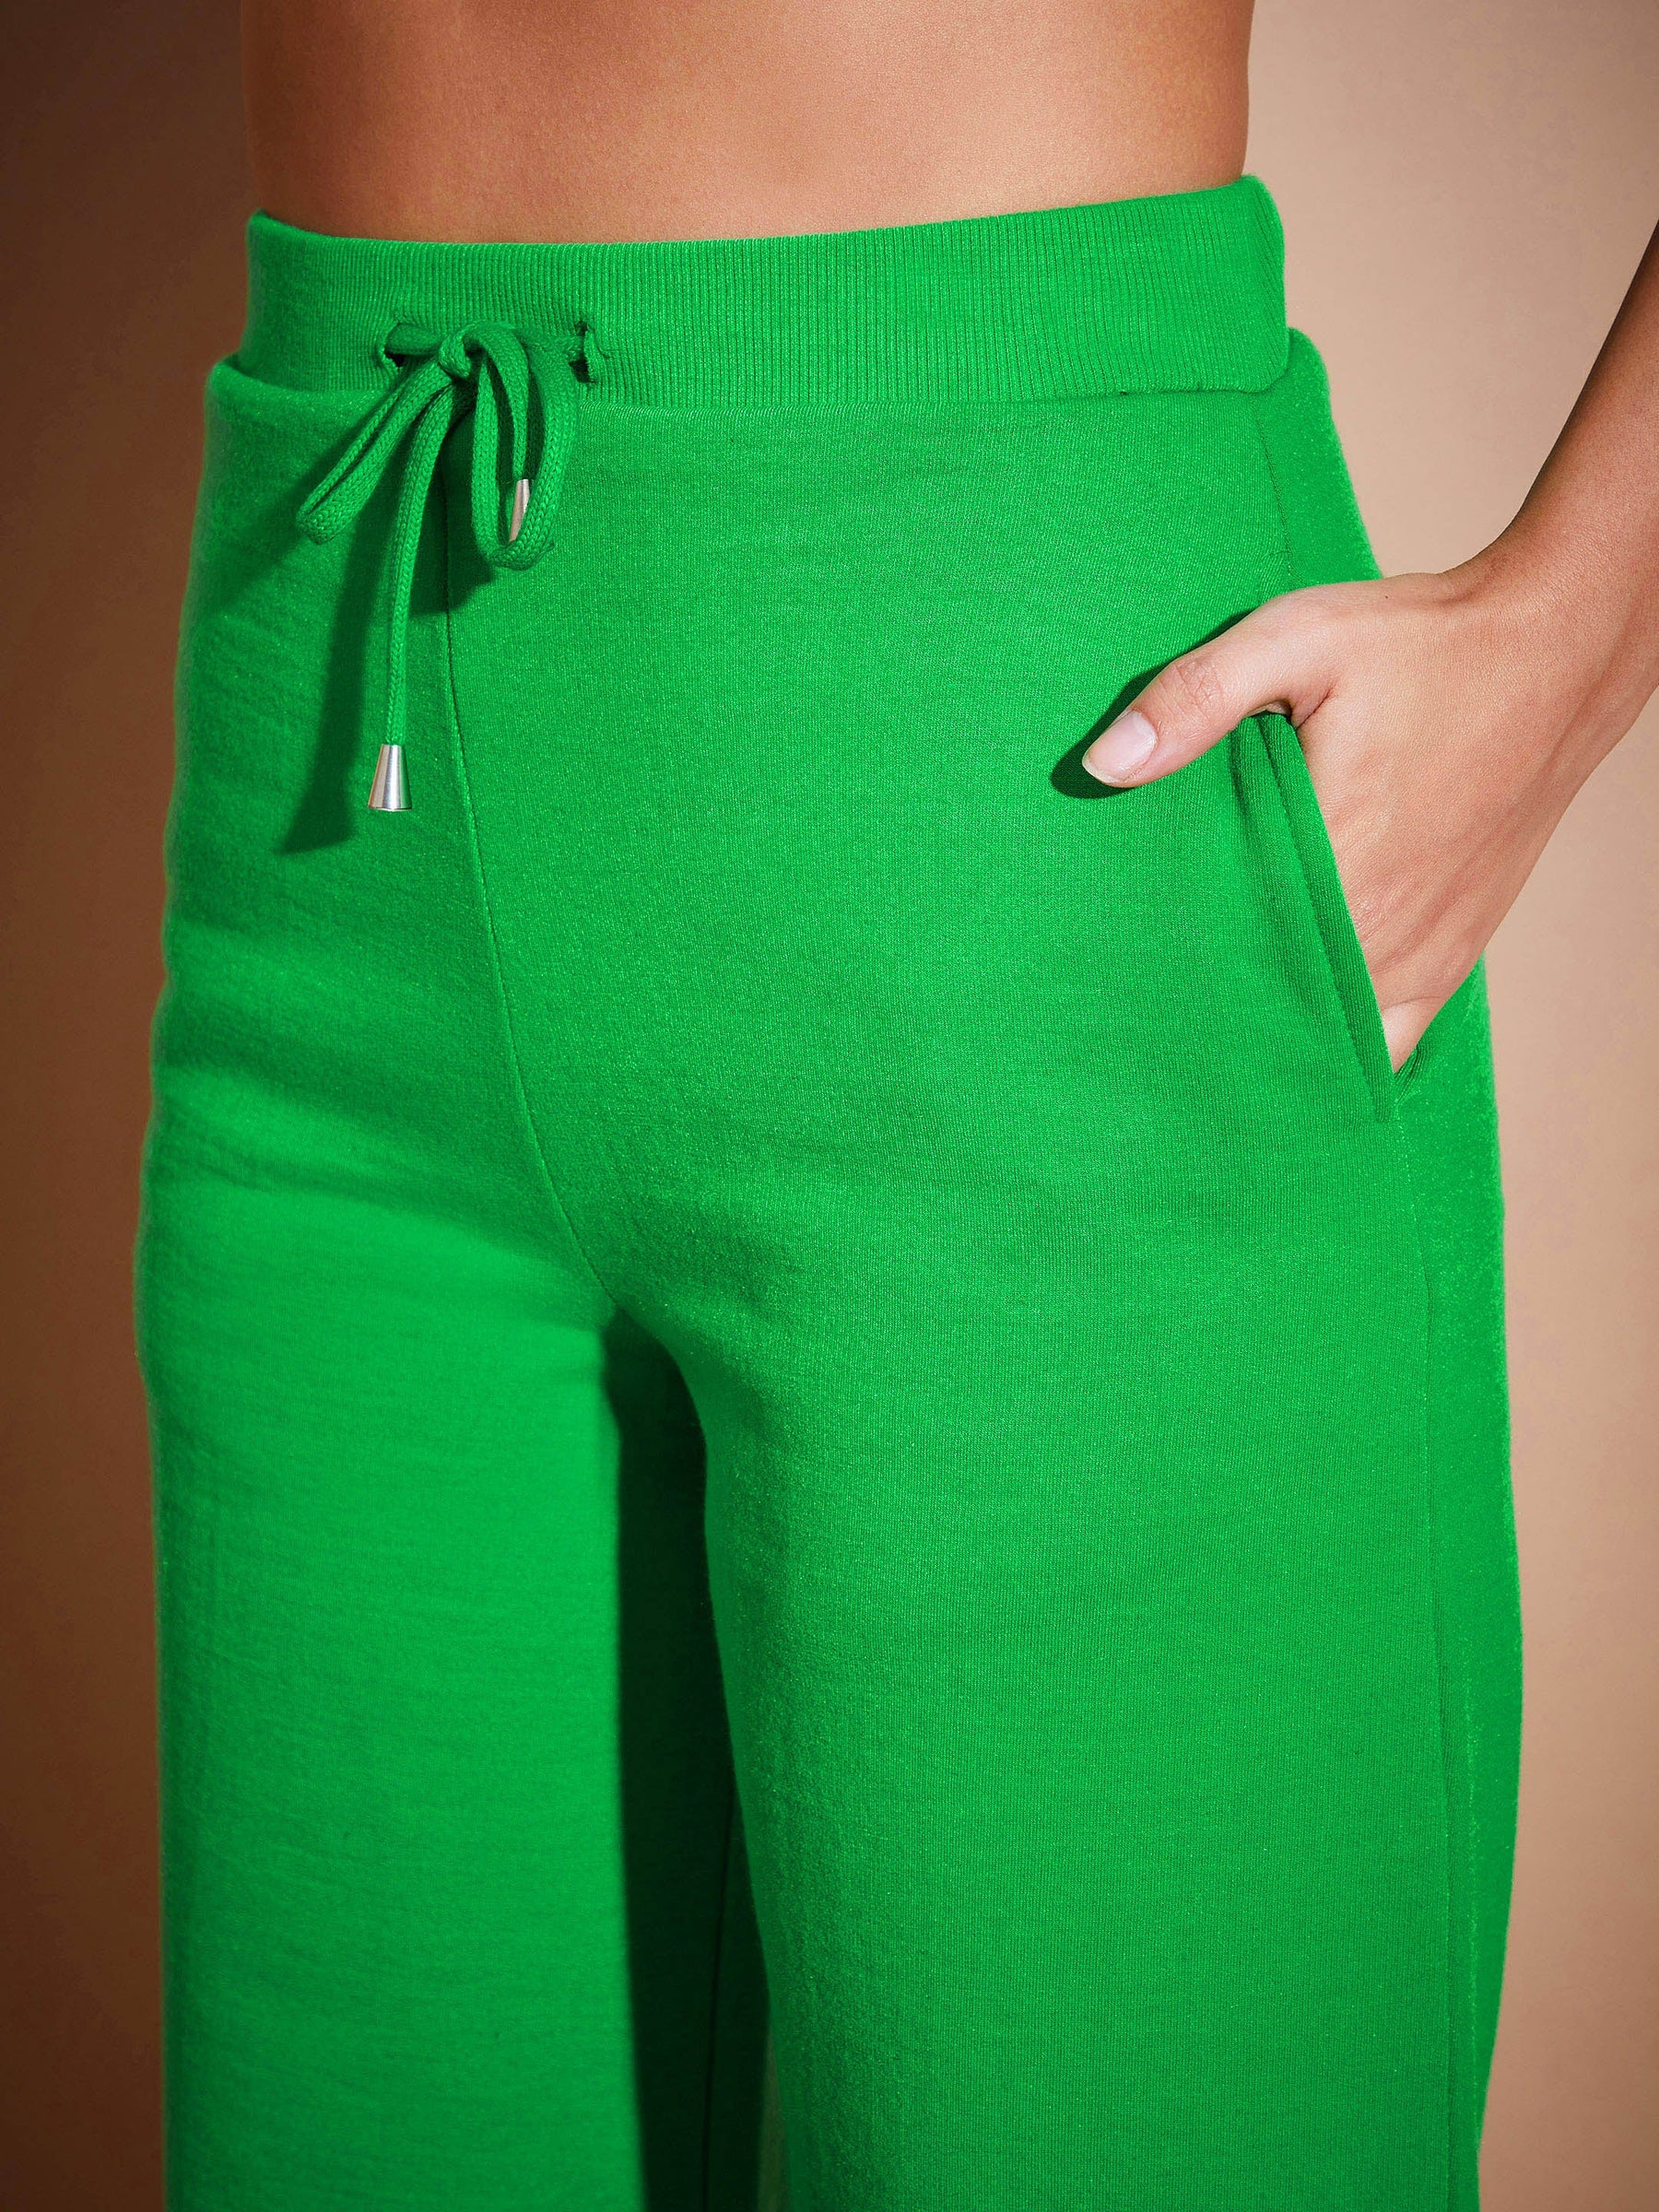 Biscay Green - Women's Sweats